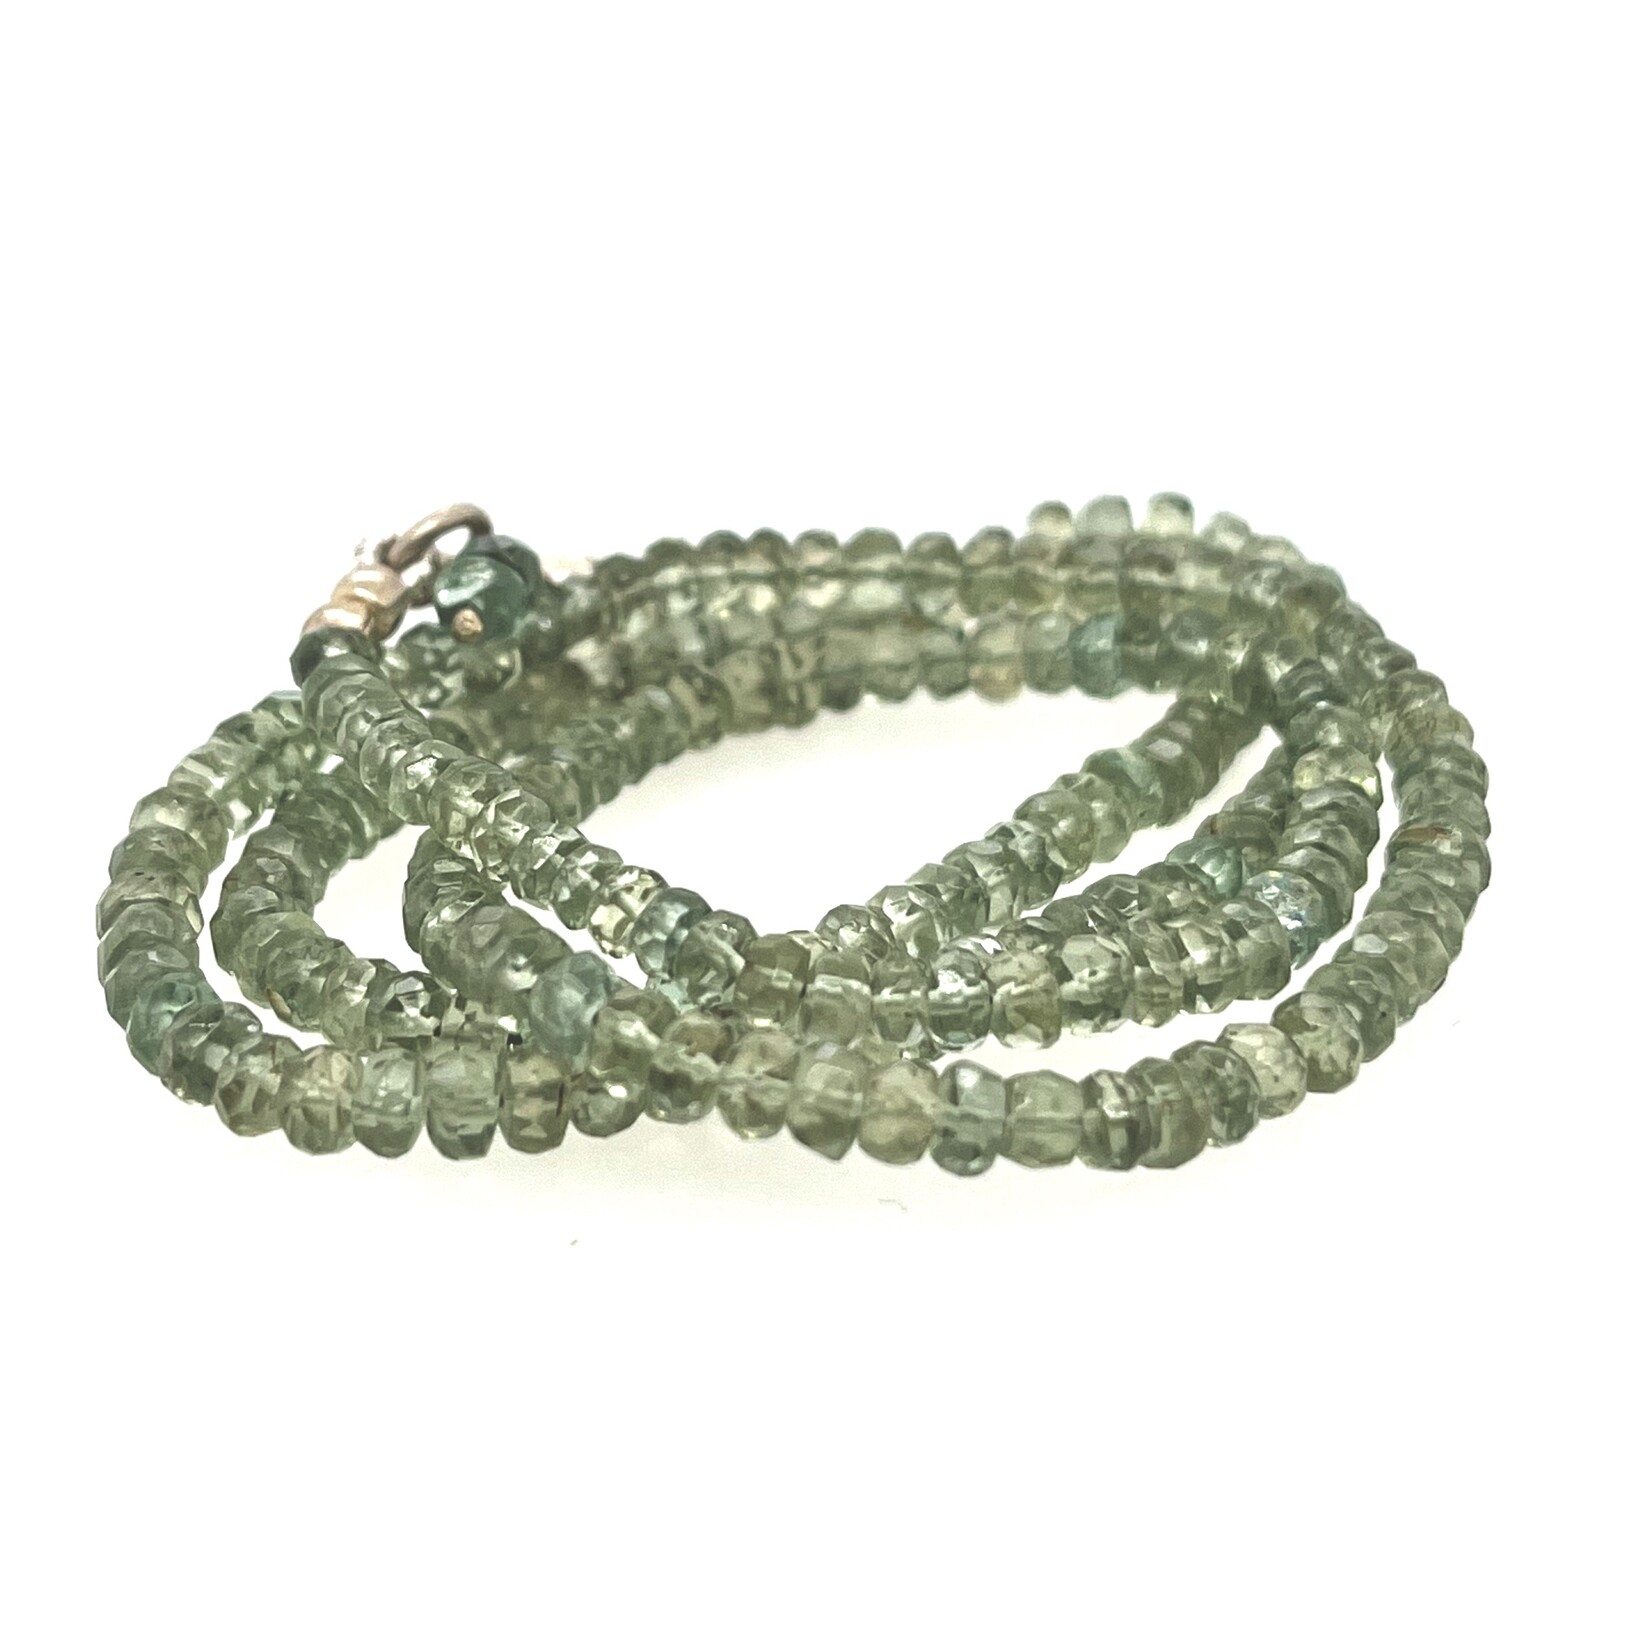 Green beryl necklace